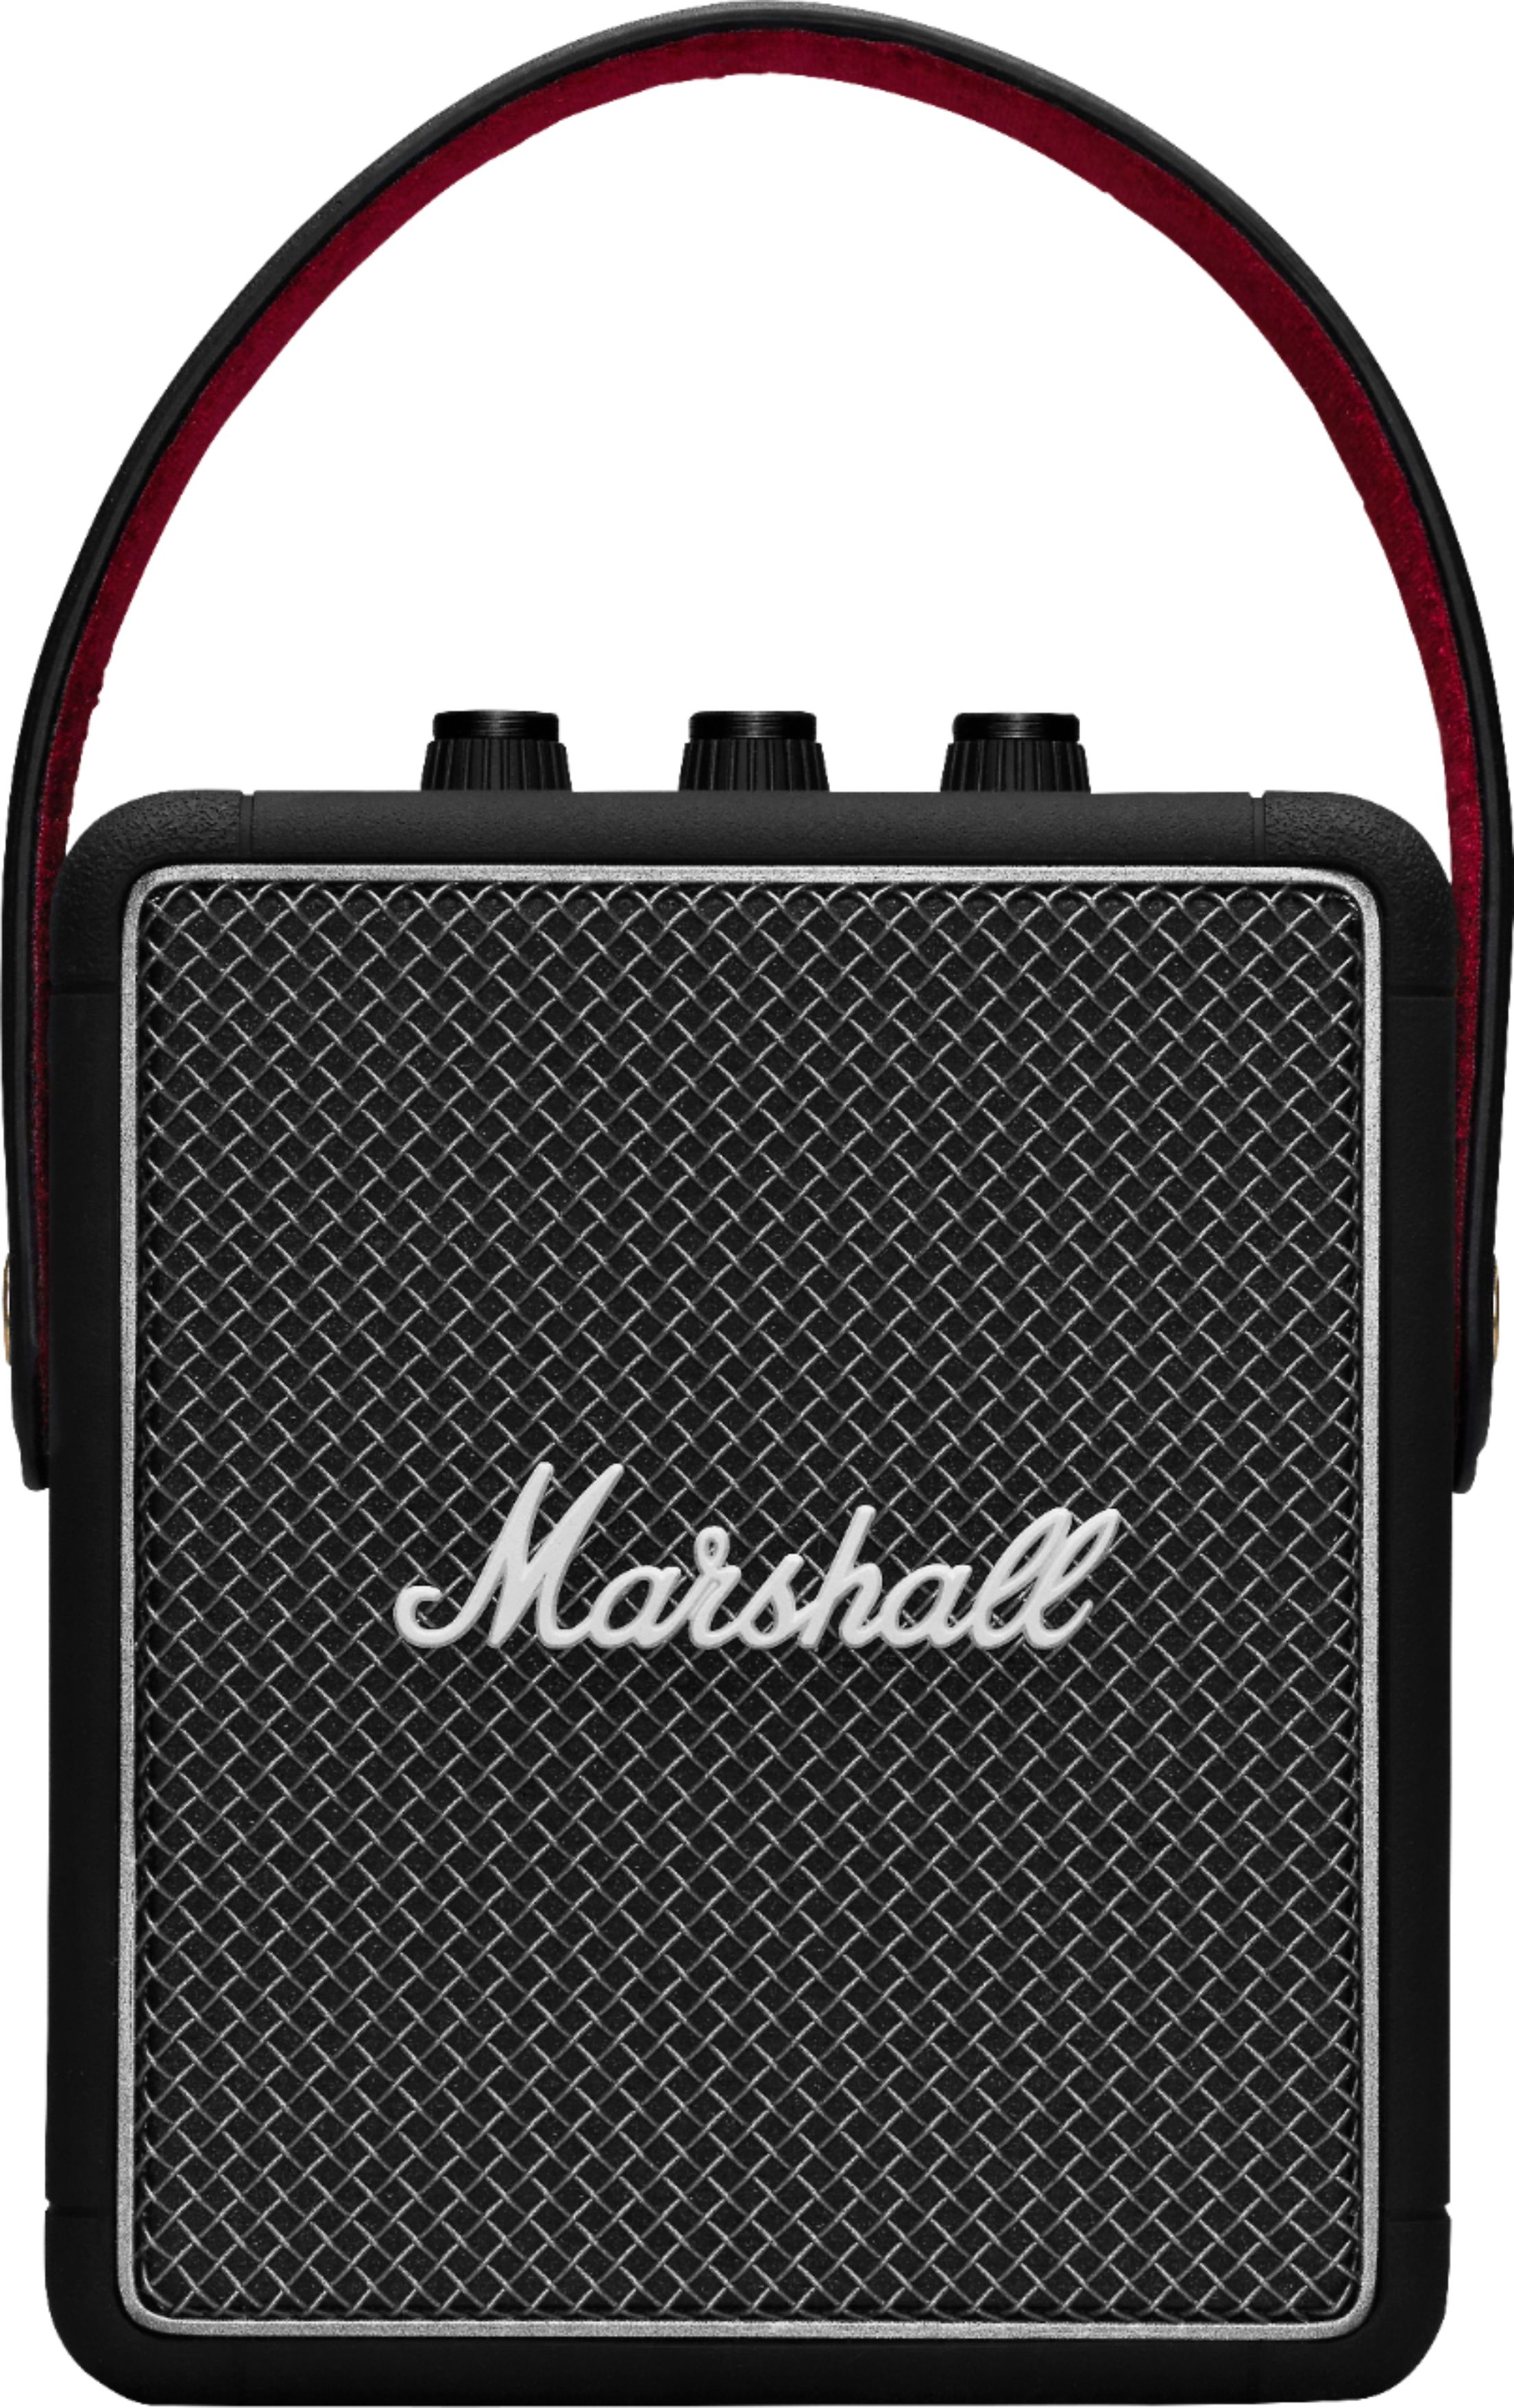 Marshall Stockwell II Portable Bluetooth Speaker Black - Best Buy